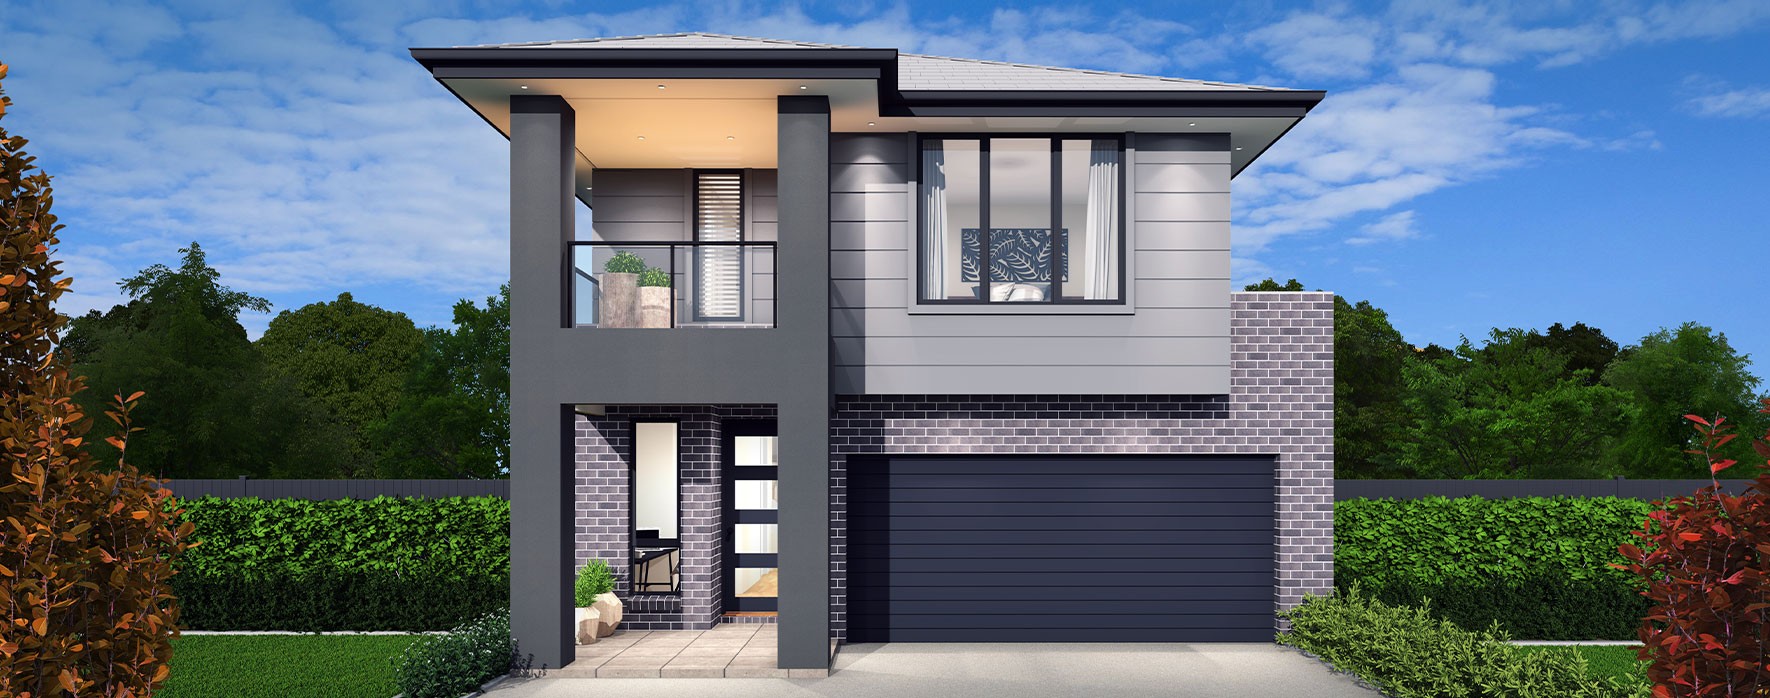 verona-double-storey-house-design-modern-with-balcony